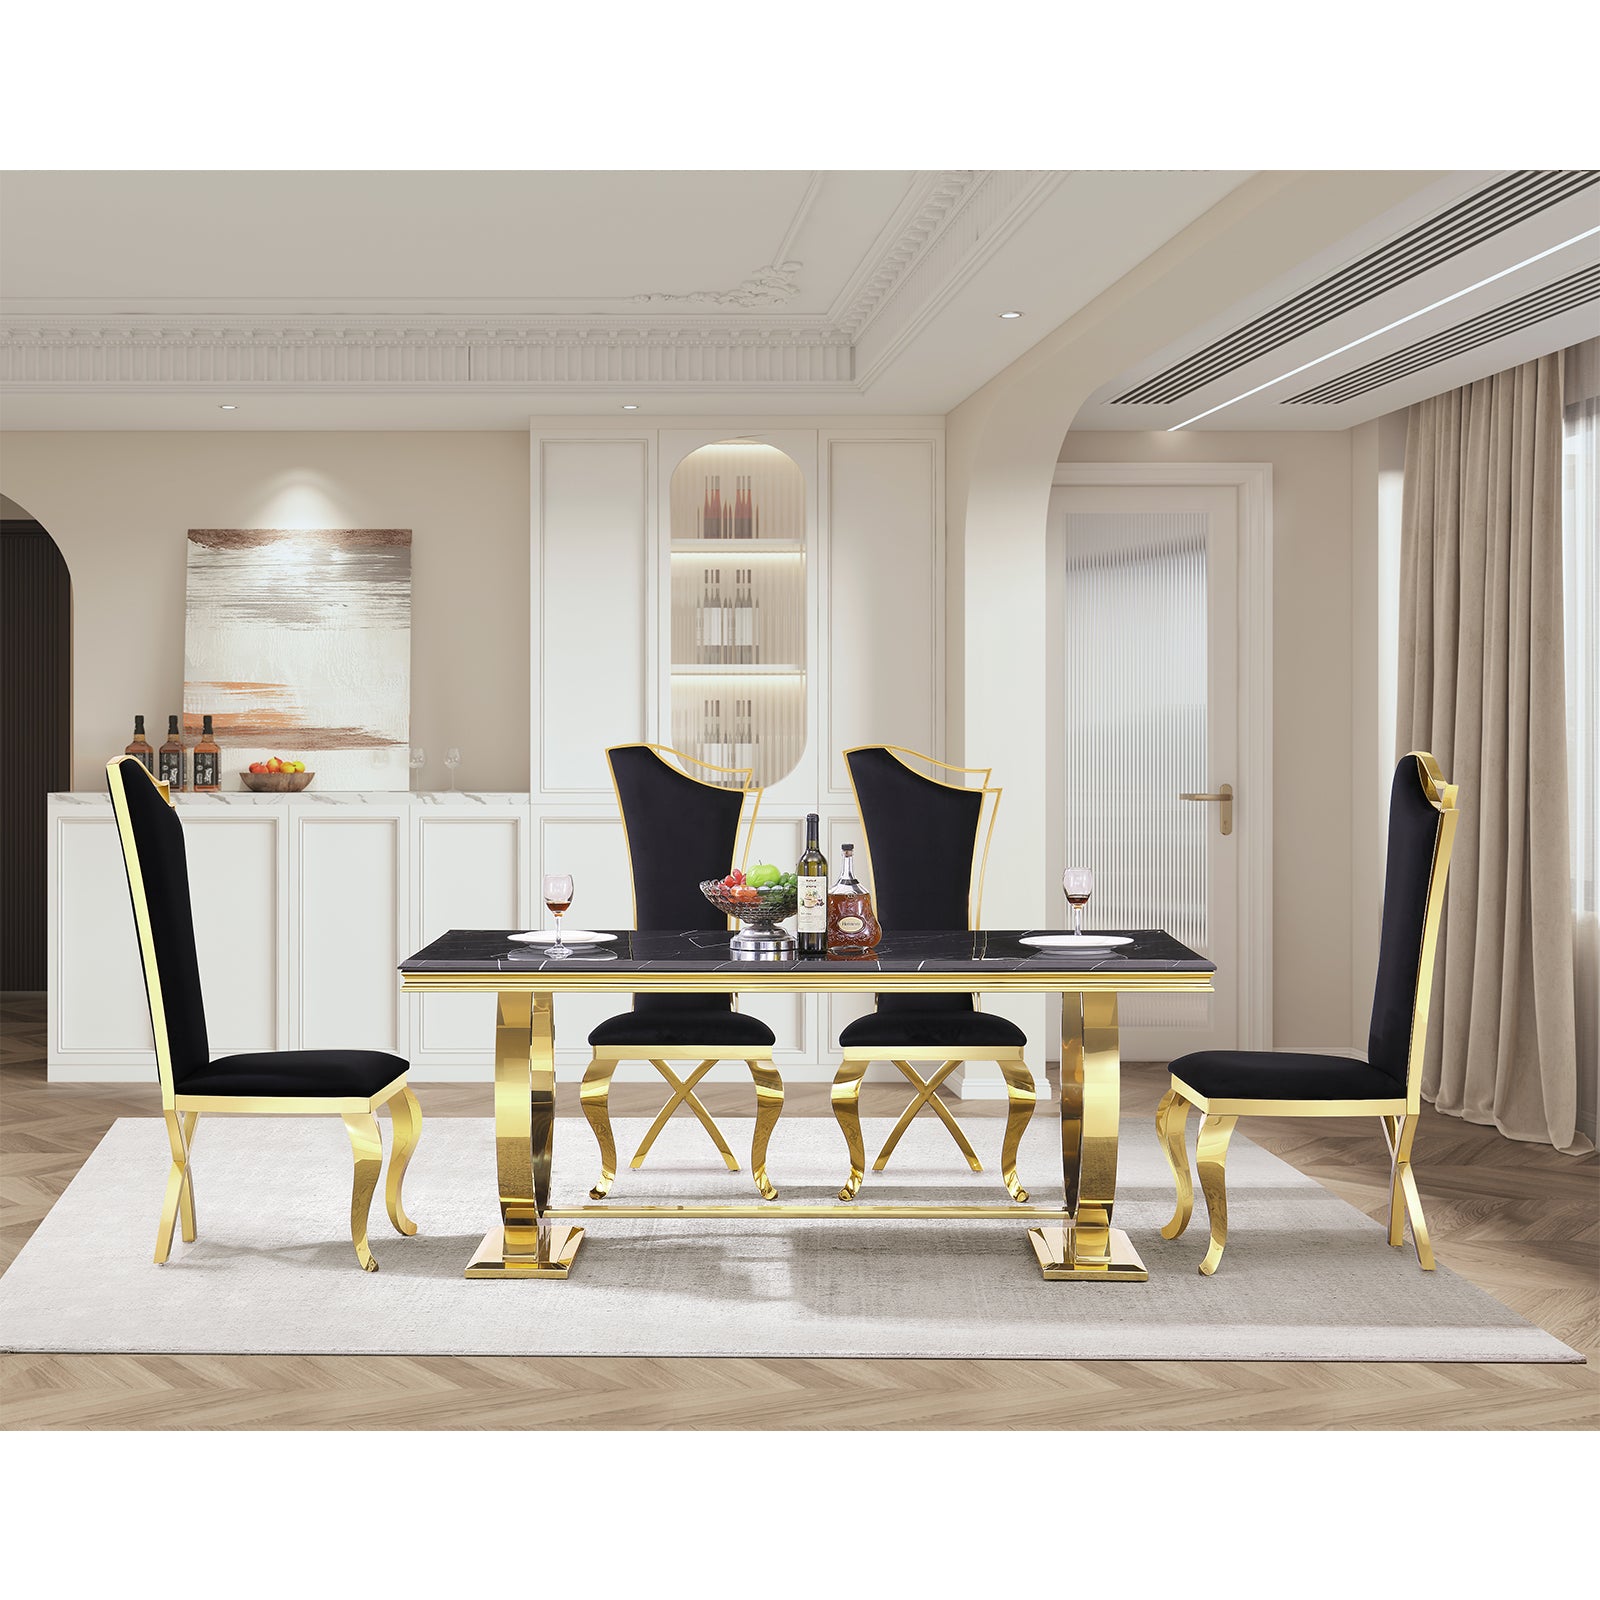 634-Set | AUZ Black and Gold Dining room Sets for 6